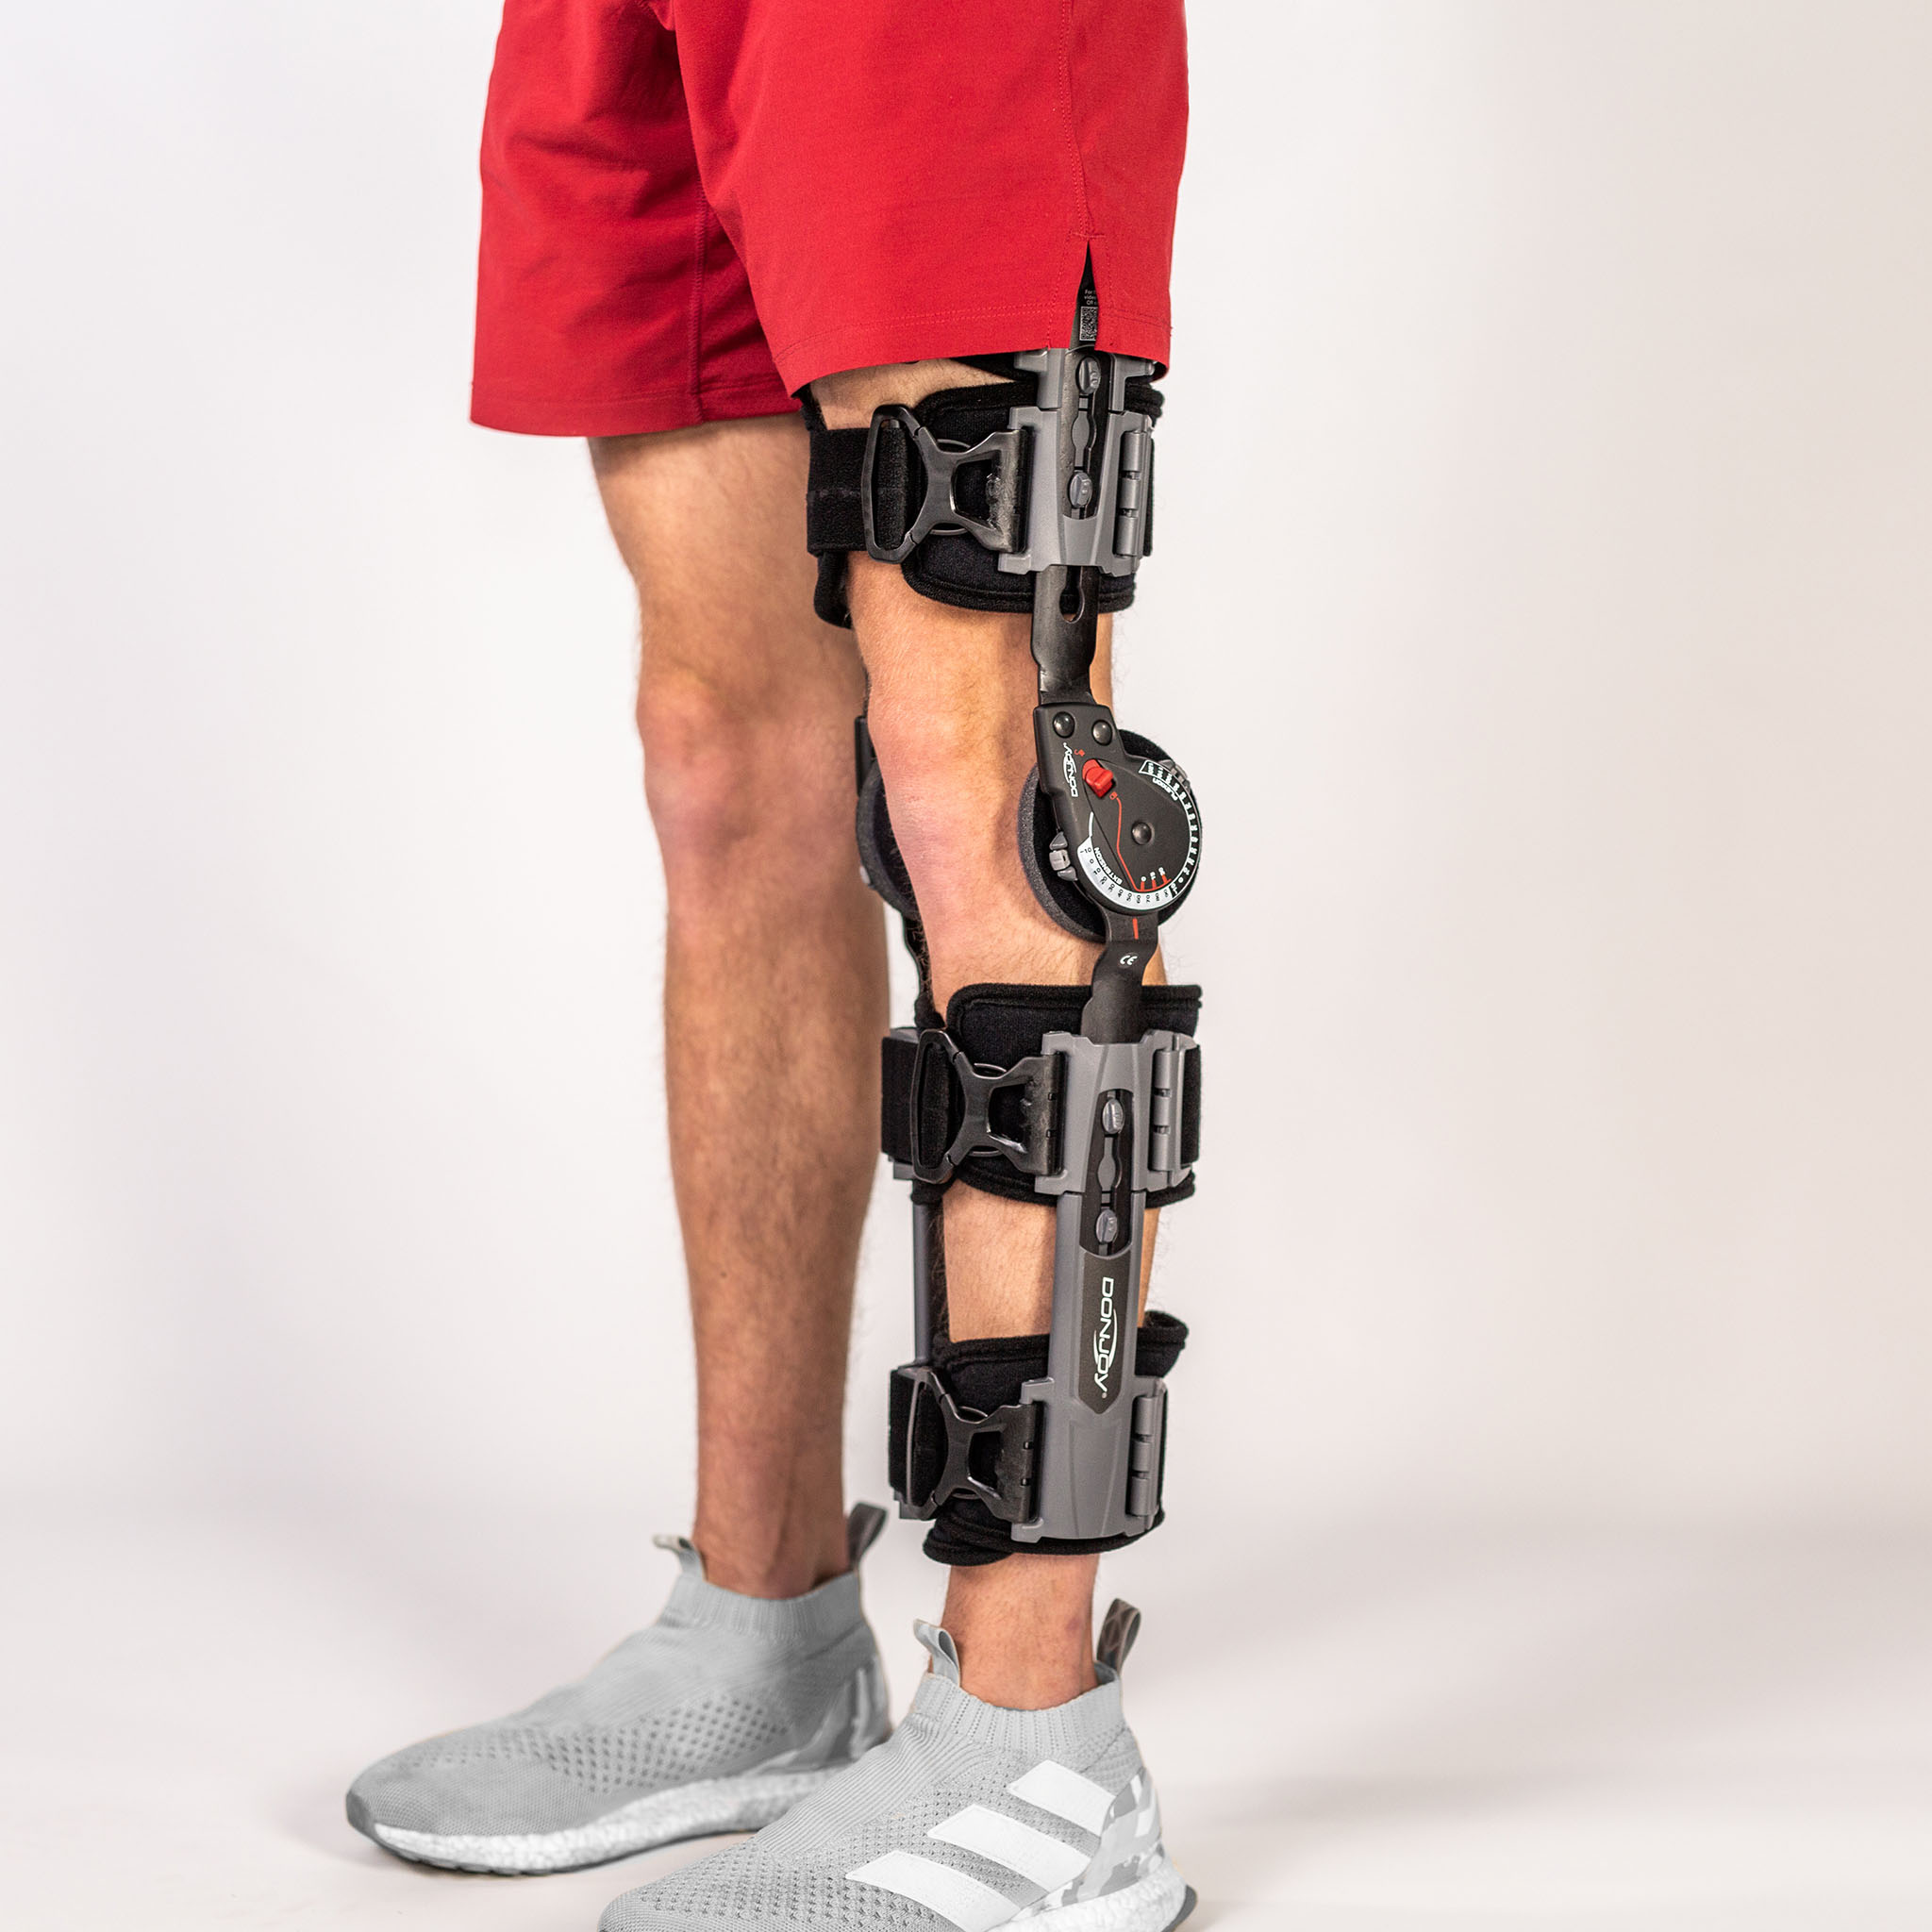 ROM & Post Operative Knee Braces